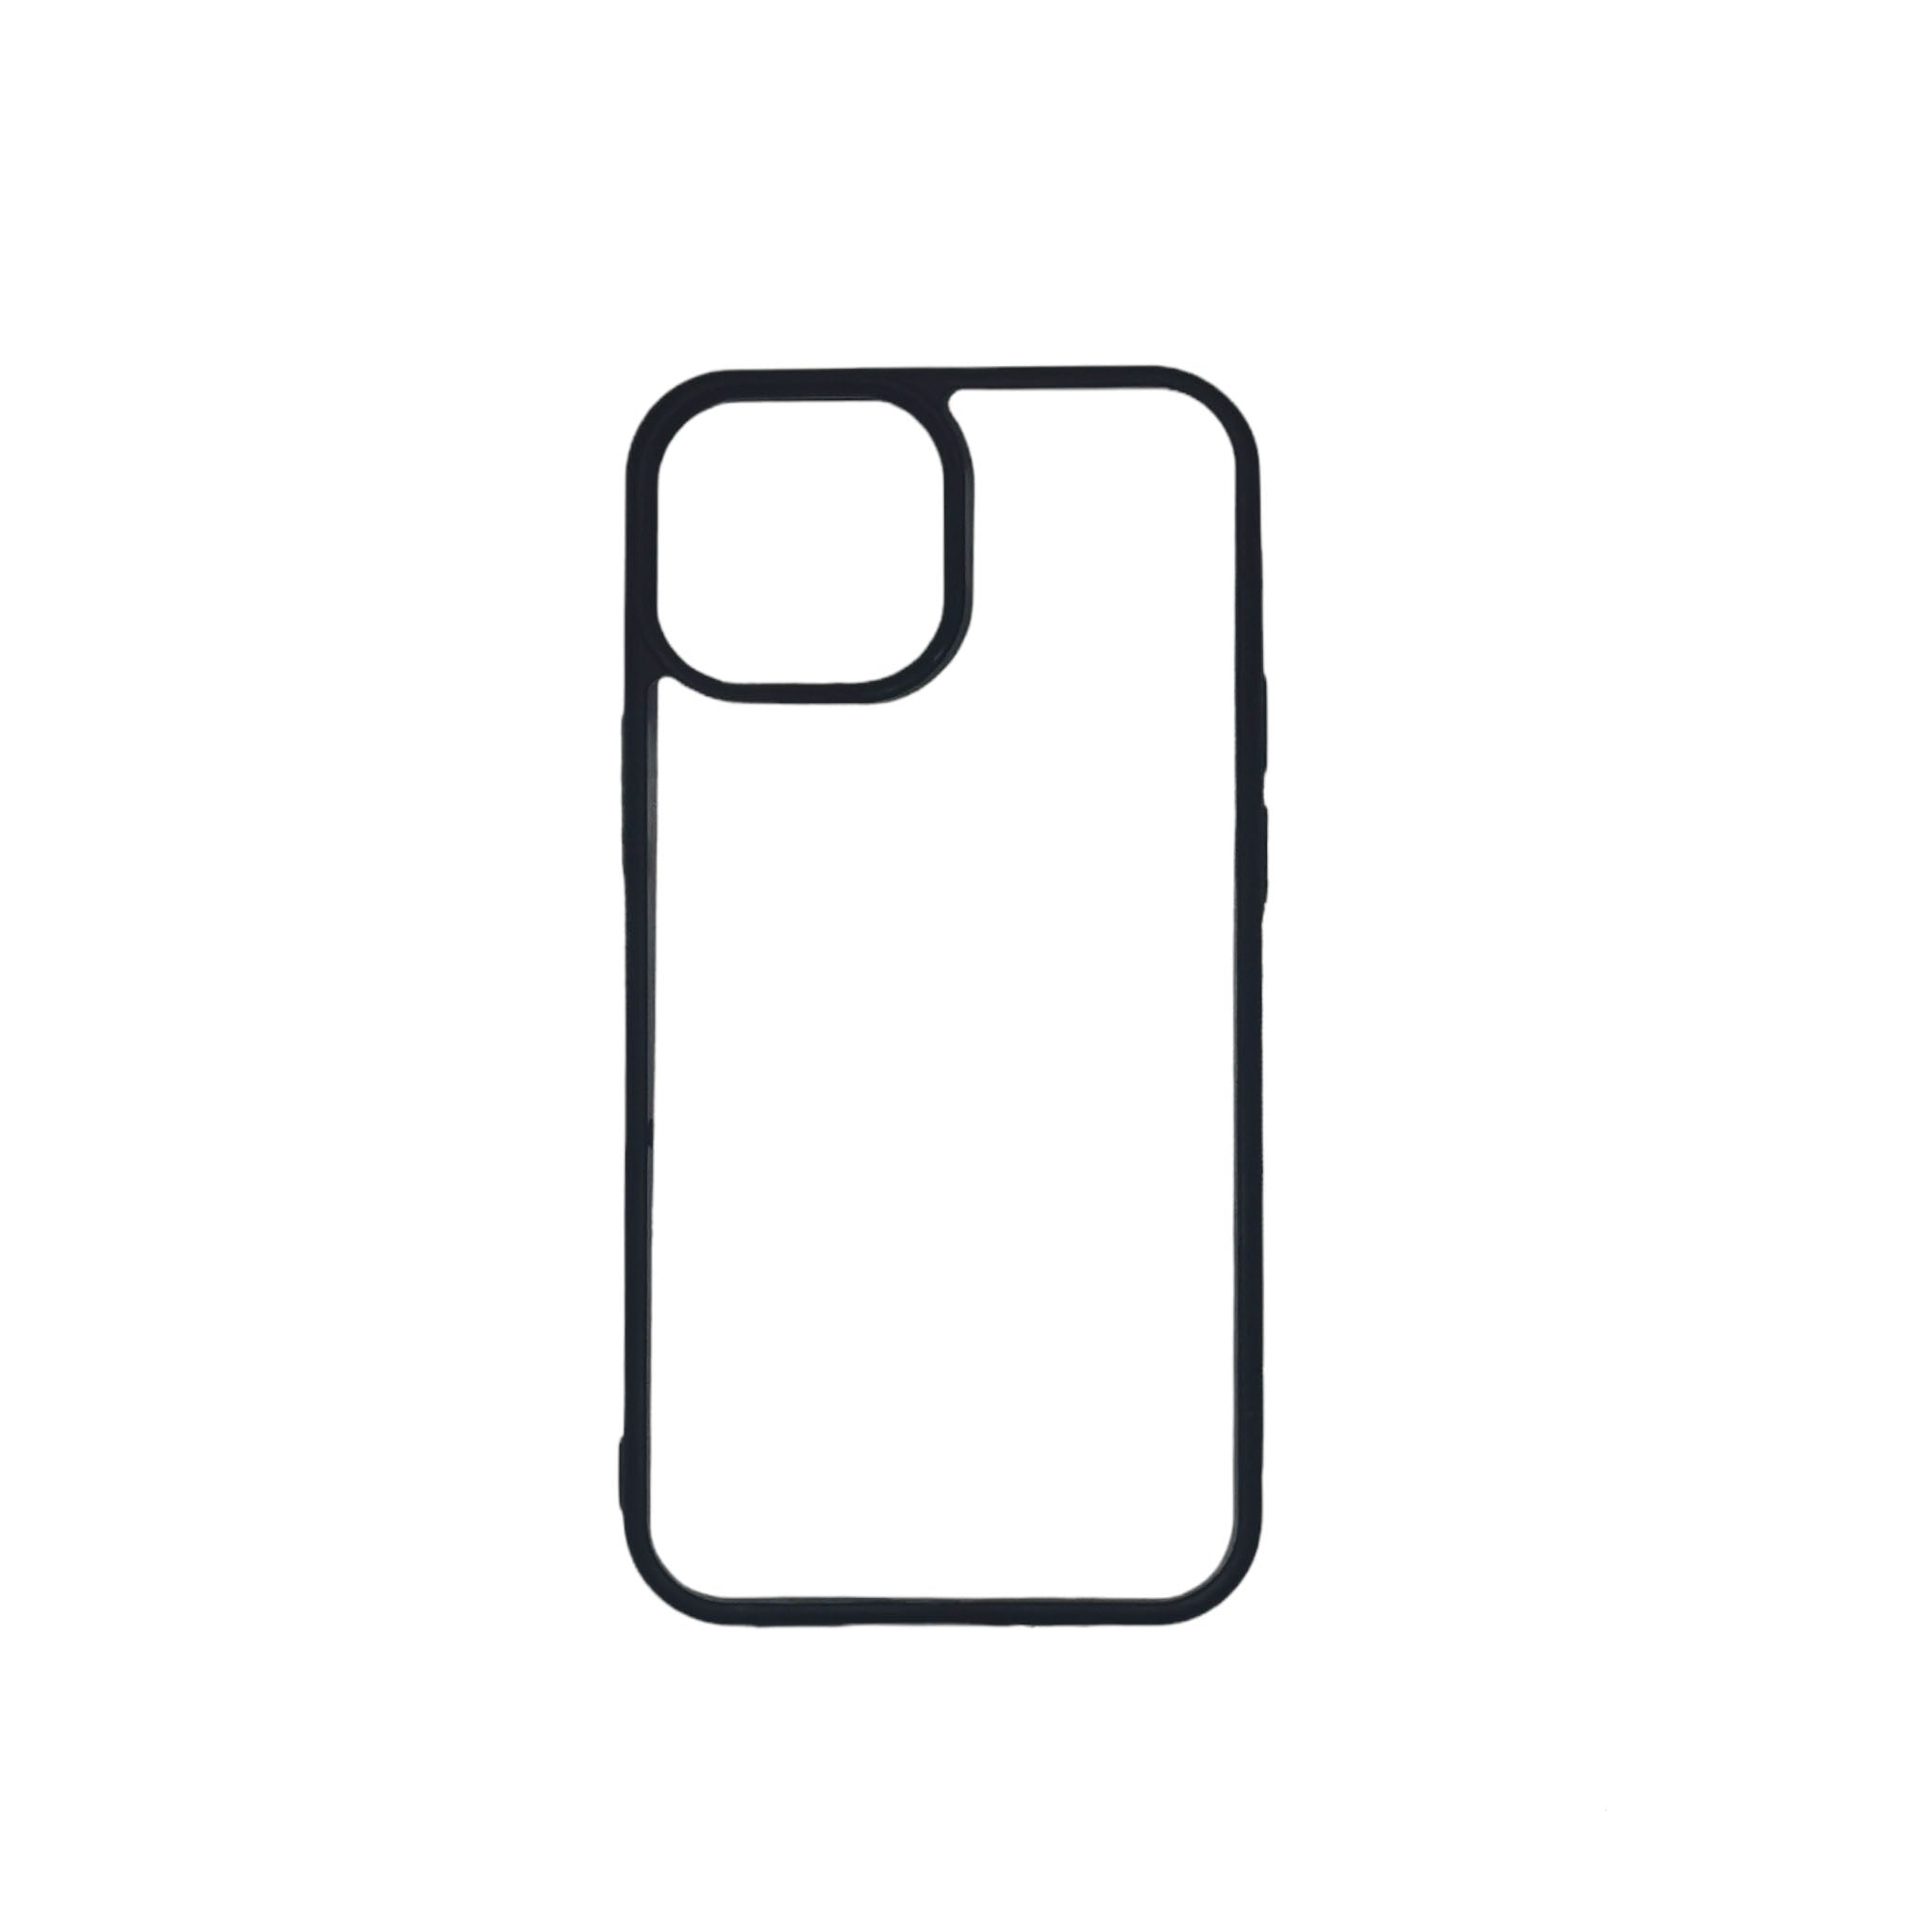 iPhone 13 Mini - Black TPU Rubber Sublimation Phone Case